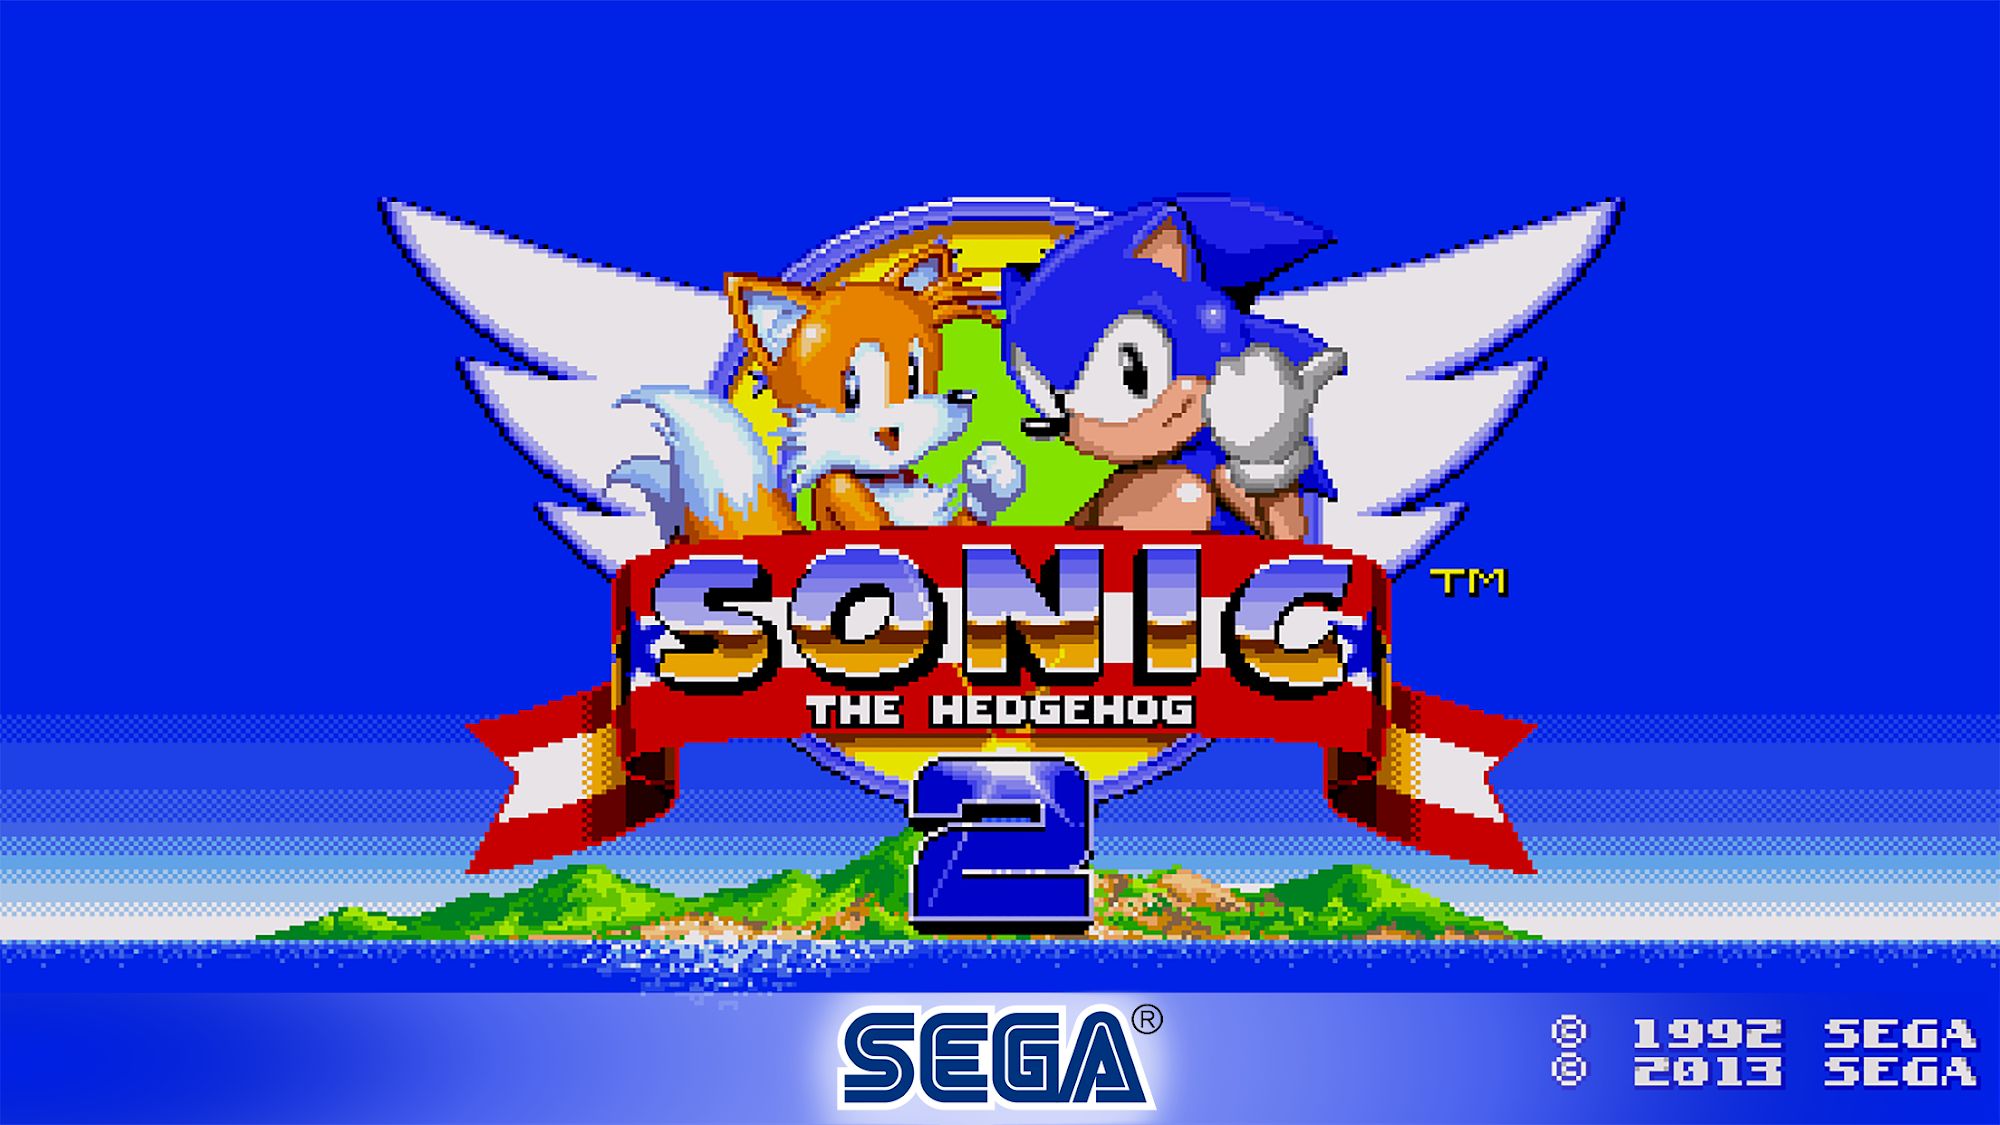 Descargar Sonic The Hedgehog 2 Classic gratis para Android.